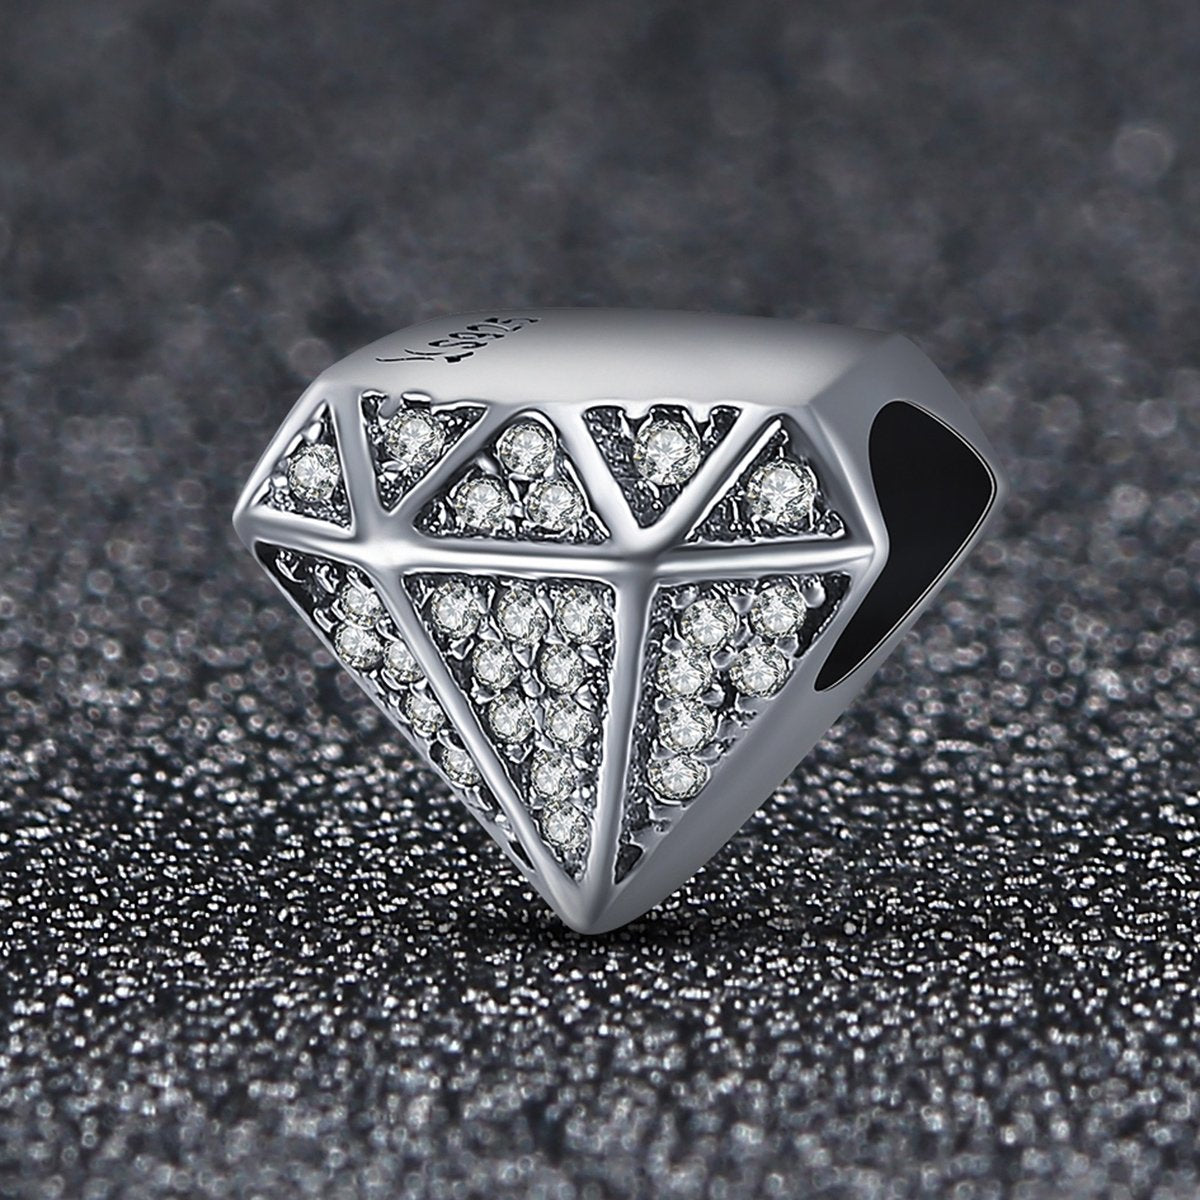 Sterling 925 silver charm the DIAMOND bead pendant fits Pandora charm and European charm bracelet Xaxe.com